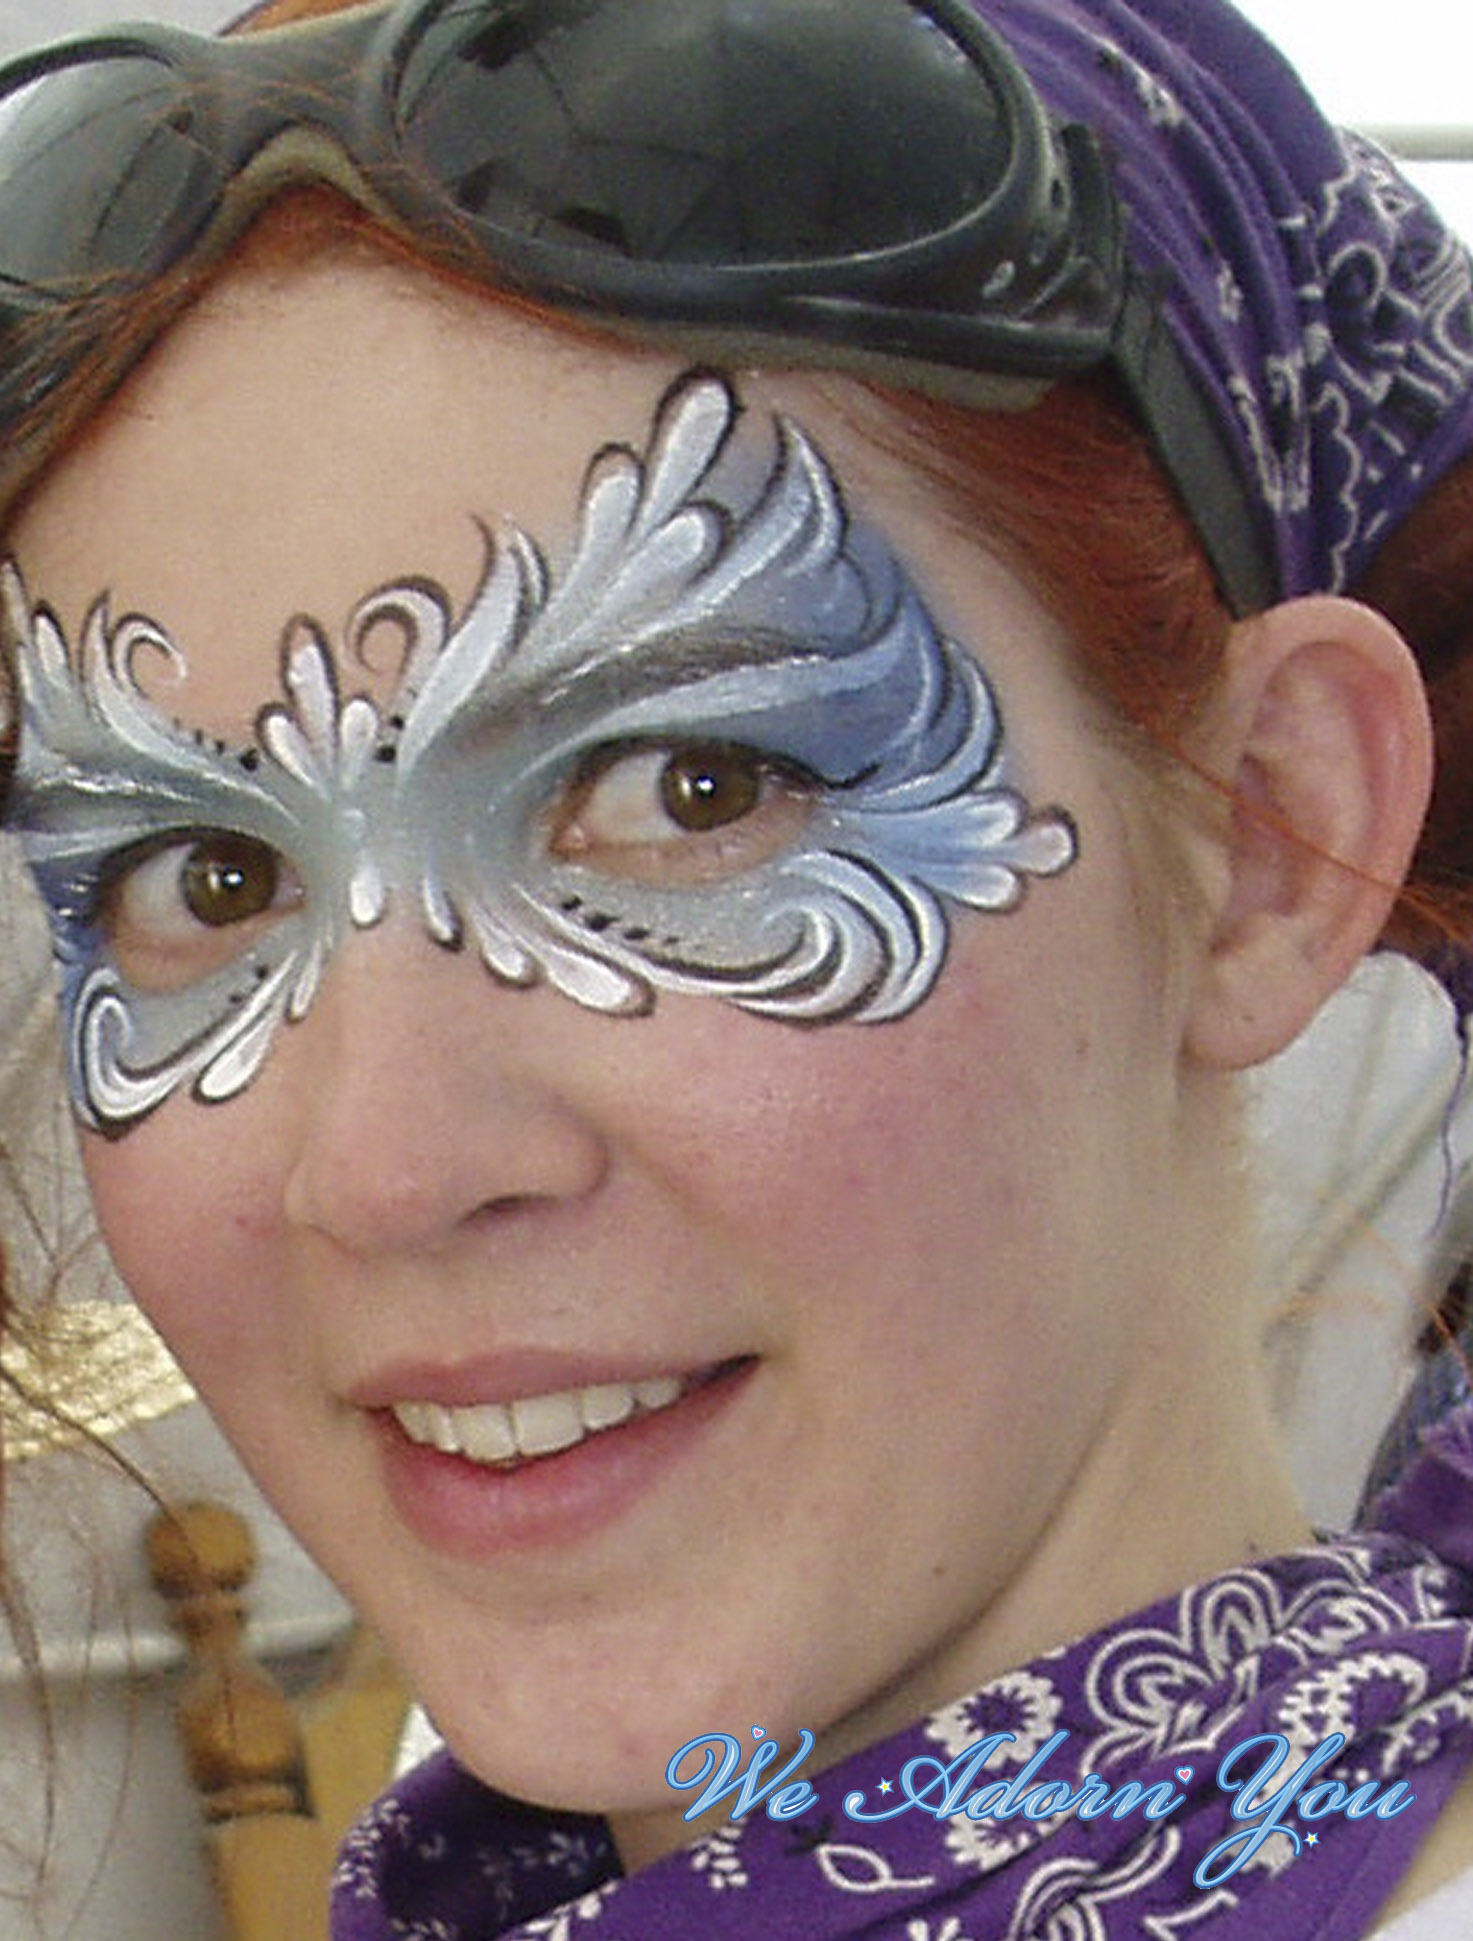 Face Painting Burning Man Mask - We Adorn You.jpg